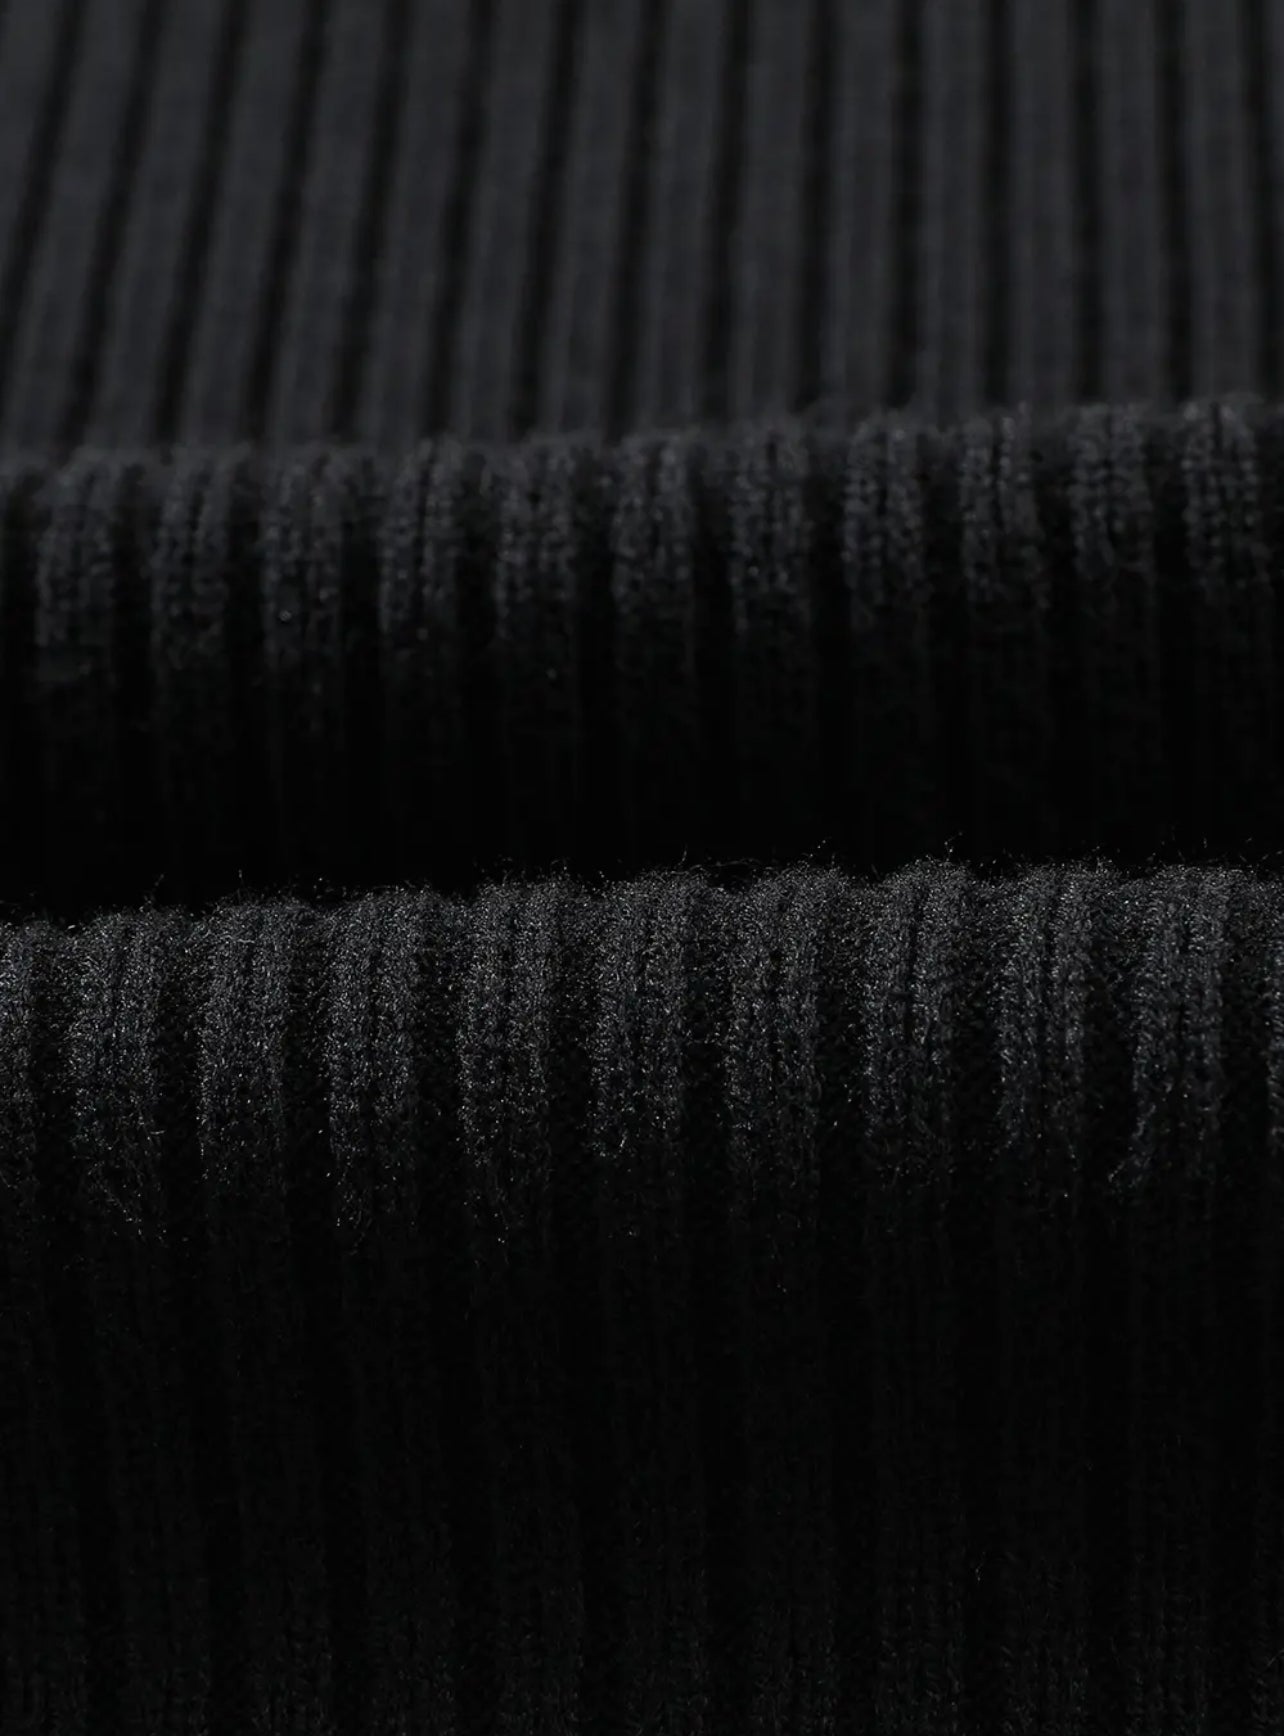 Black Ribbed Short Sleeve Pocket Sweater